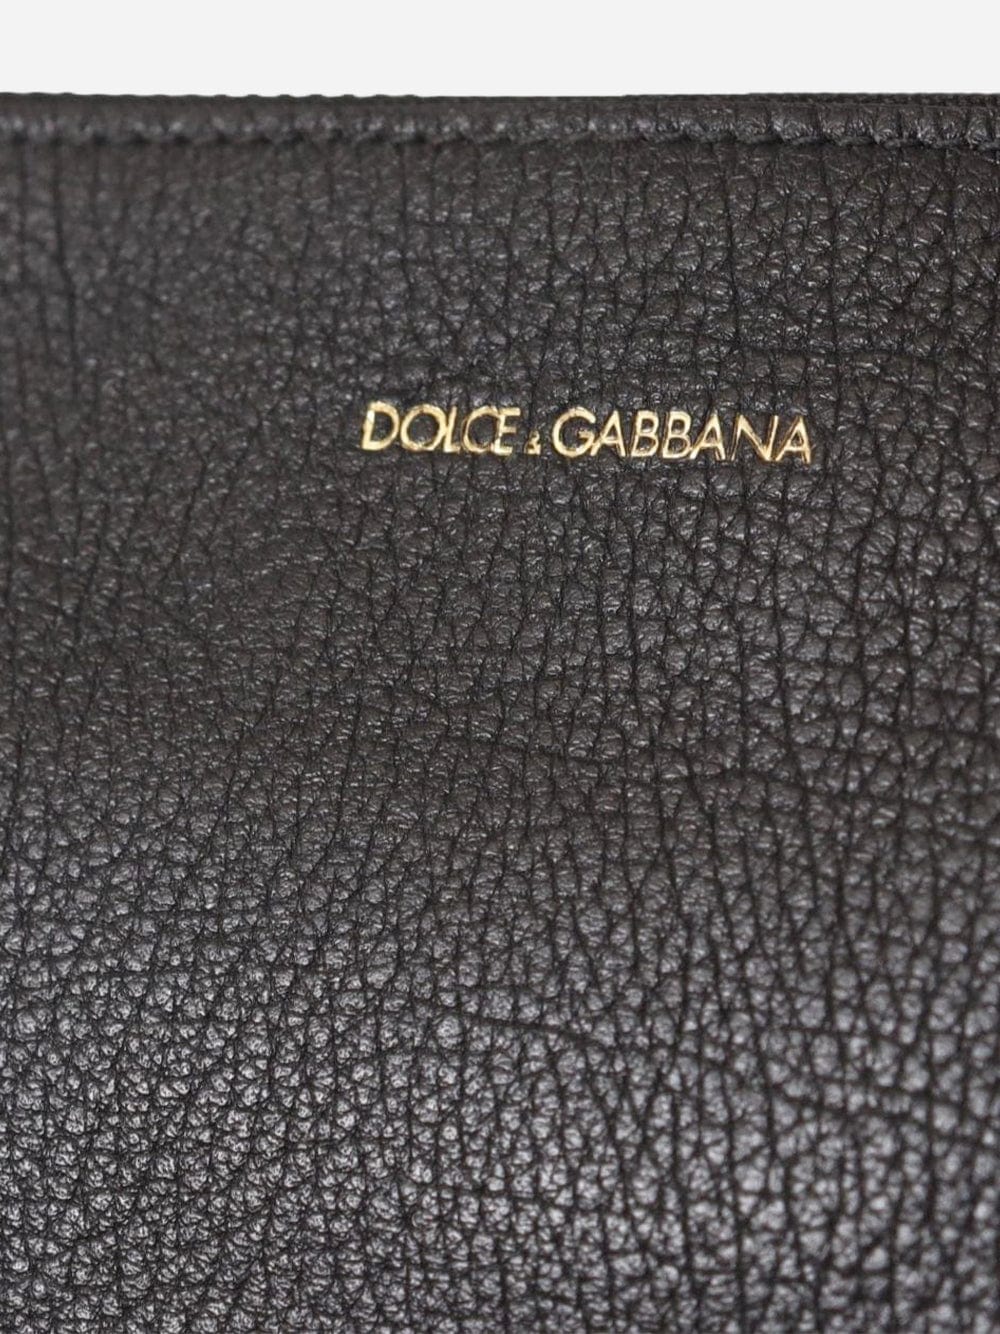 Dolce & Gabbana Alta Sartoria Messenger Bag